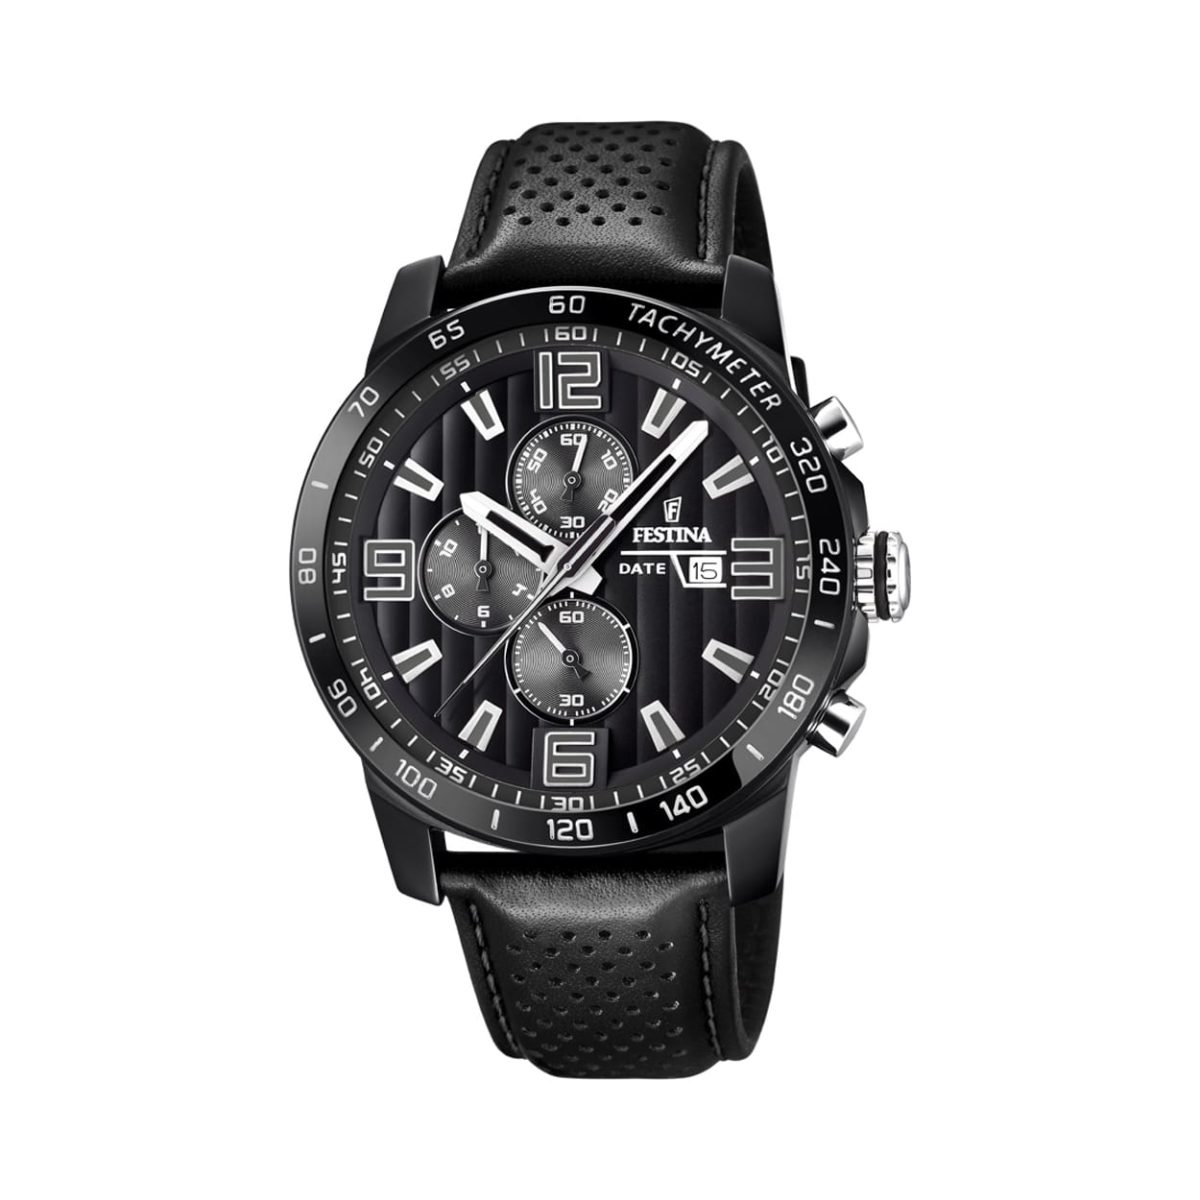 Festina Chronograph Black Leather Strap Men's Watch - F20339/6